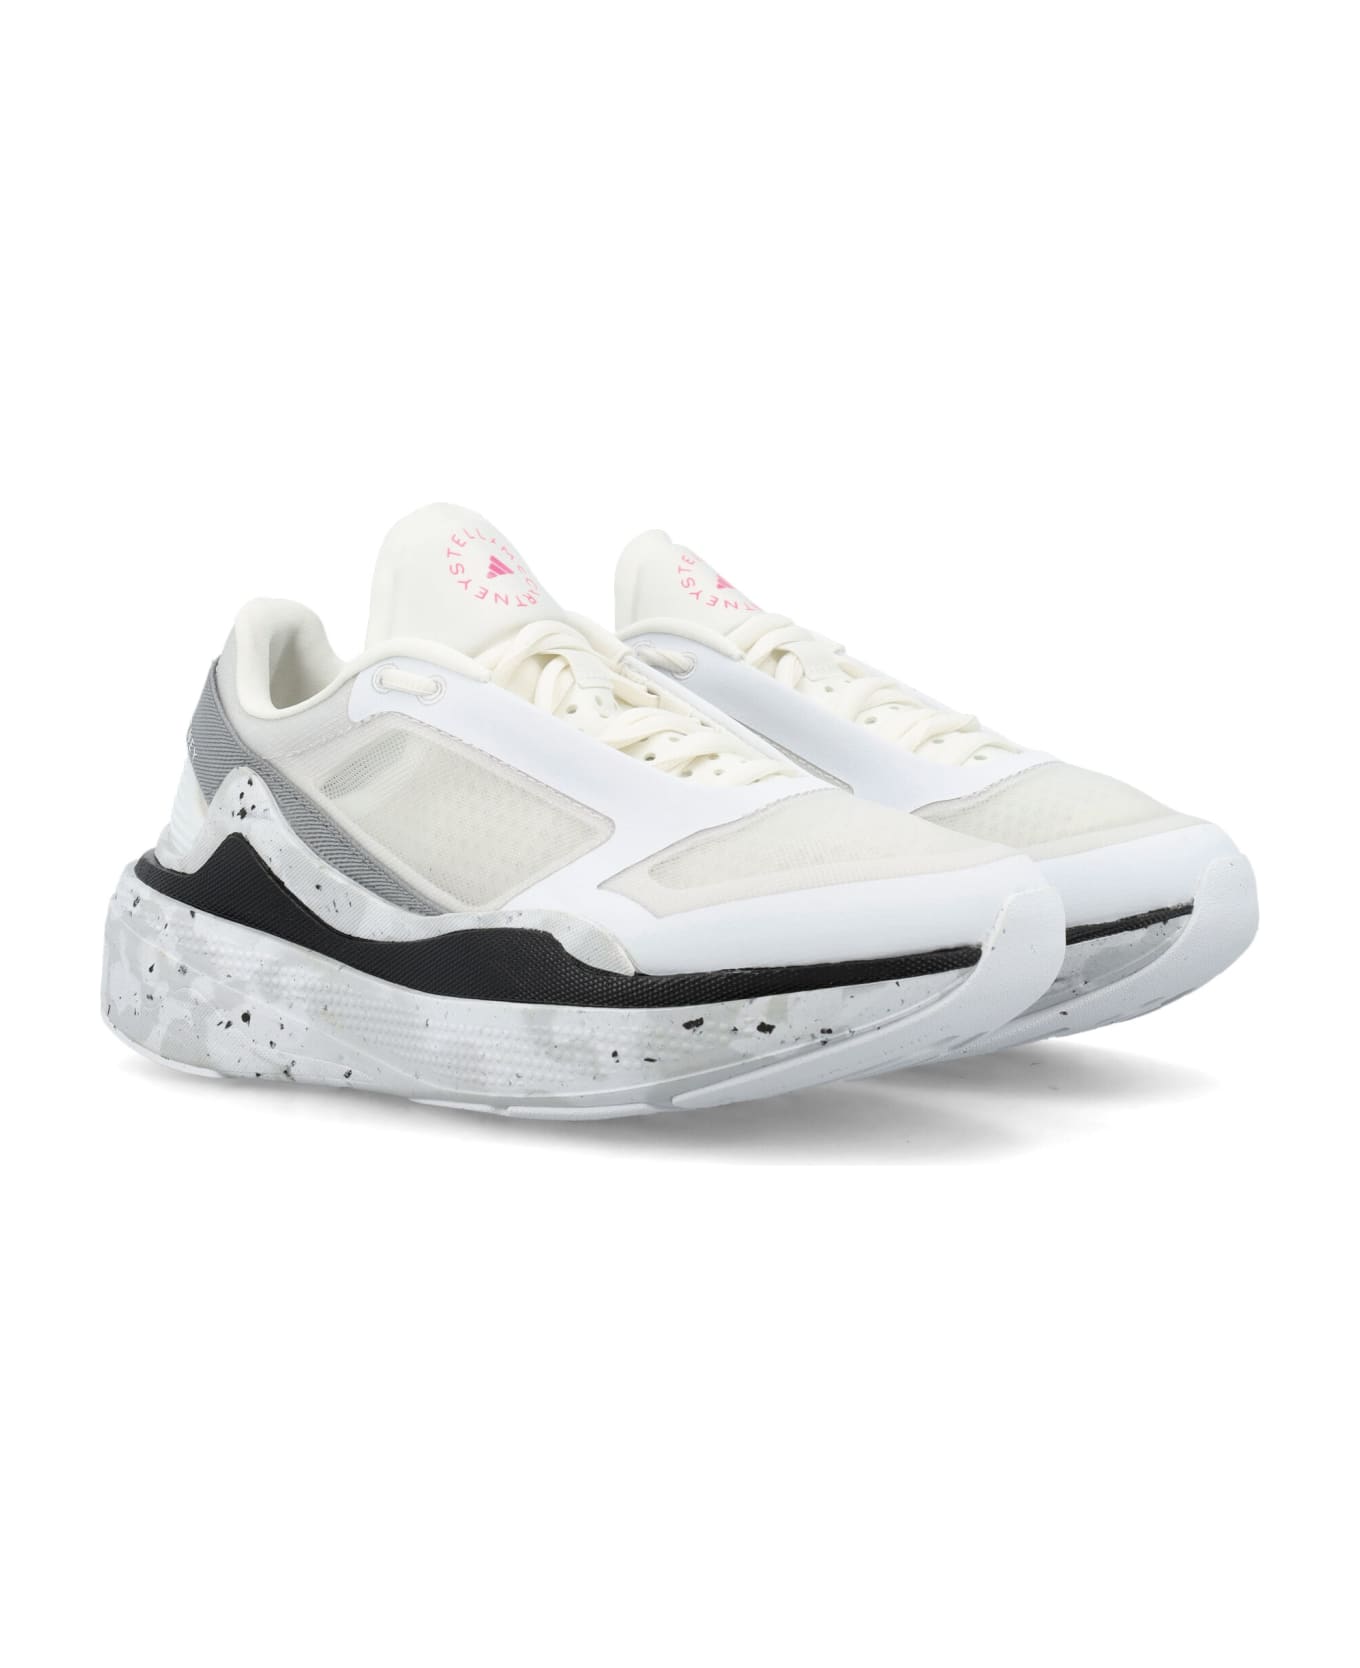 Adidas by Stella McCartney Eartlight Mesh Running Shoes Woman - WHITE/GREY/BLACK